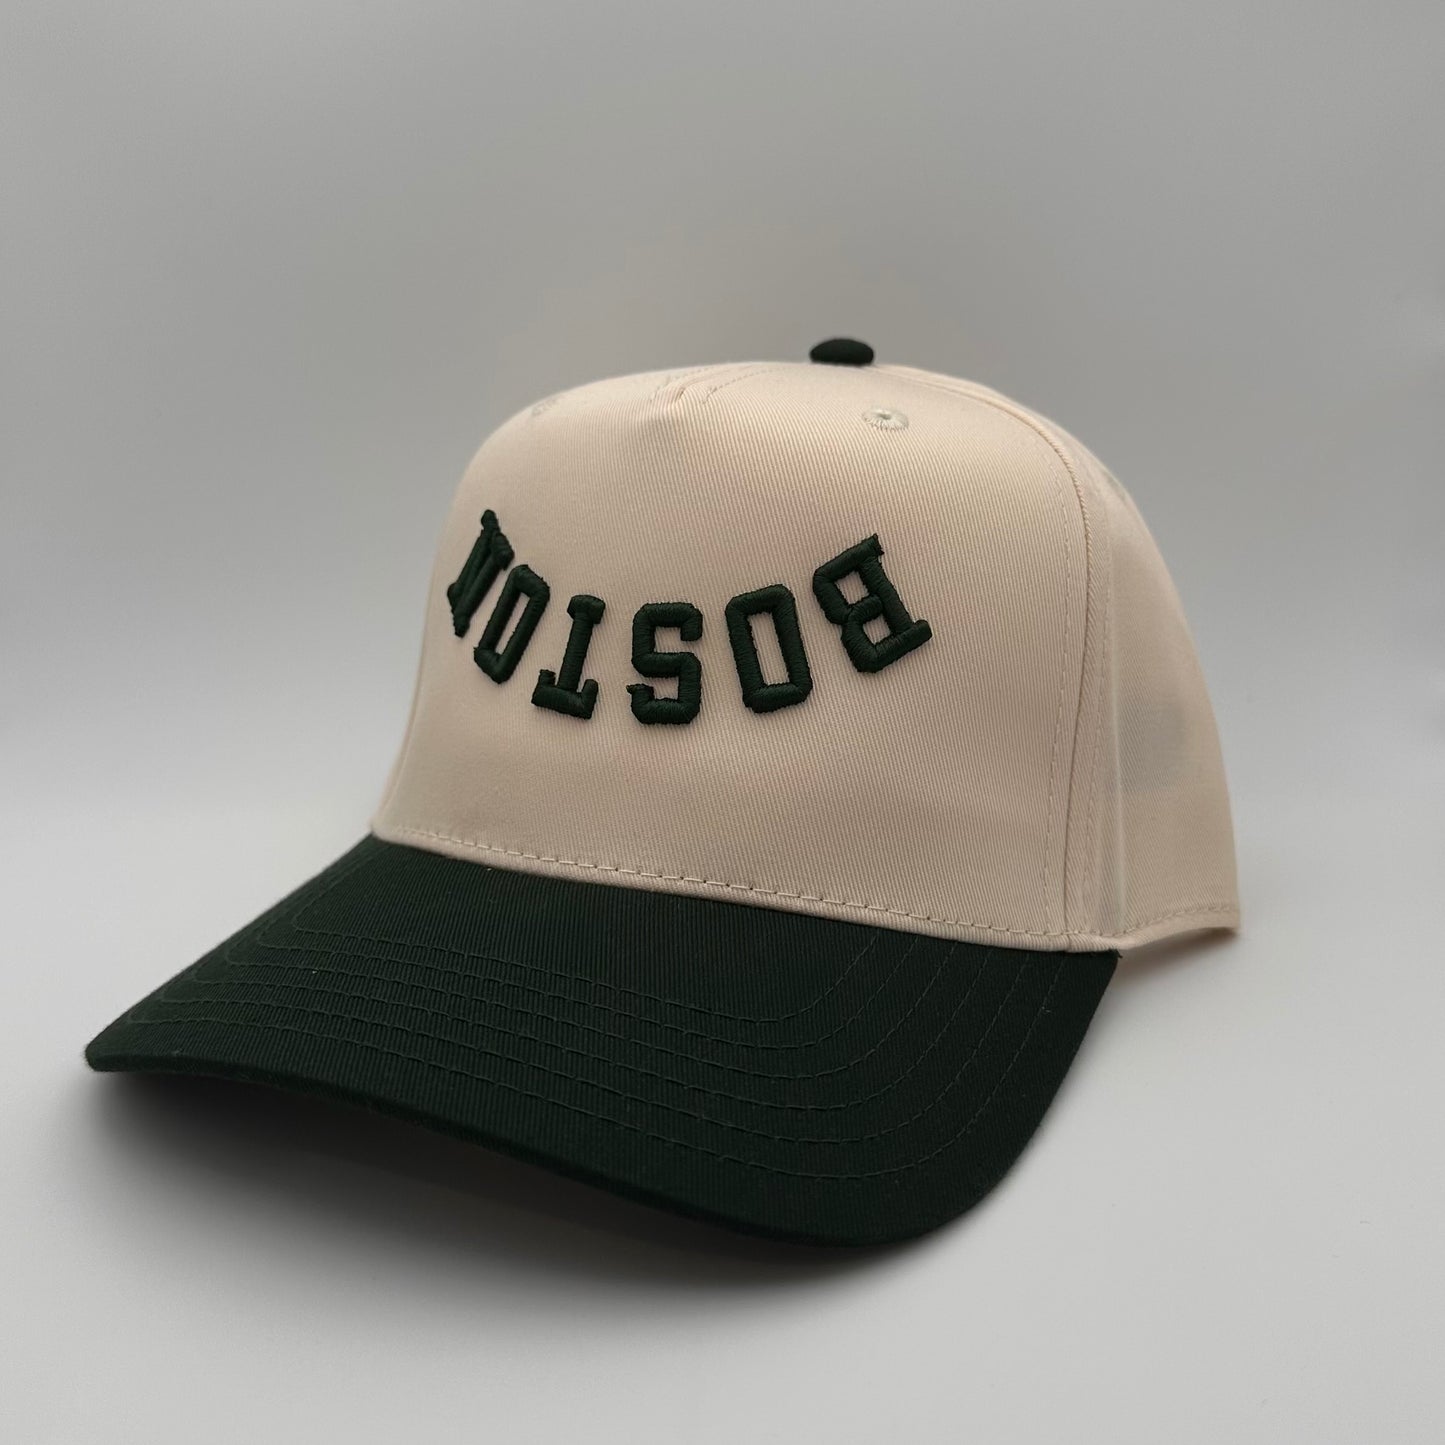 The Boston Hat - Natural/Dk Green